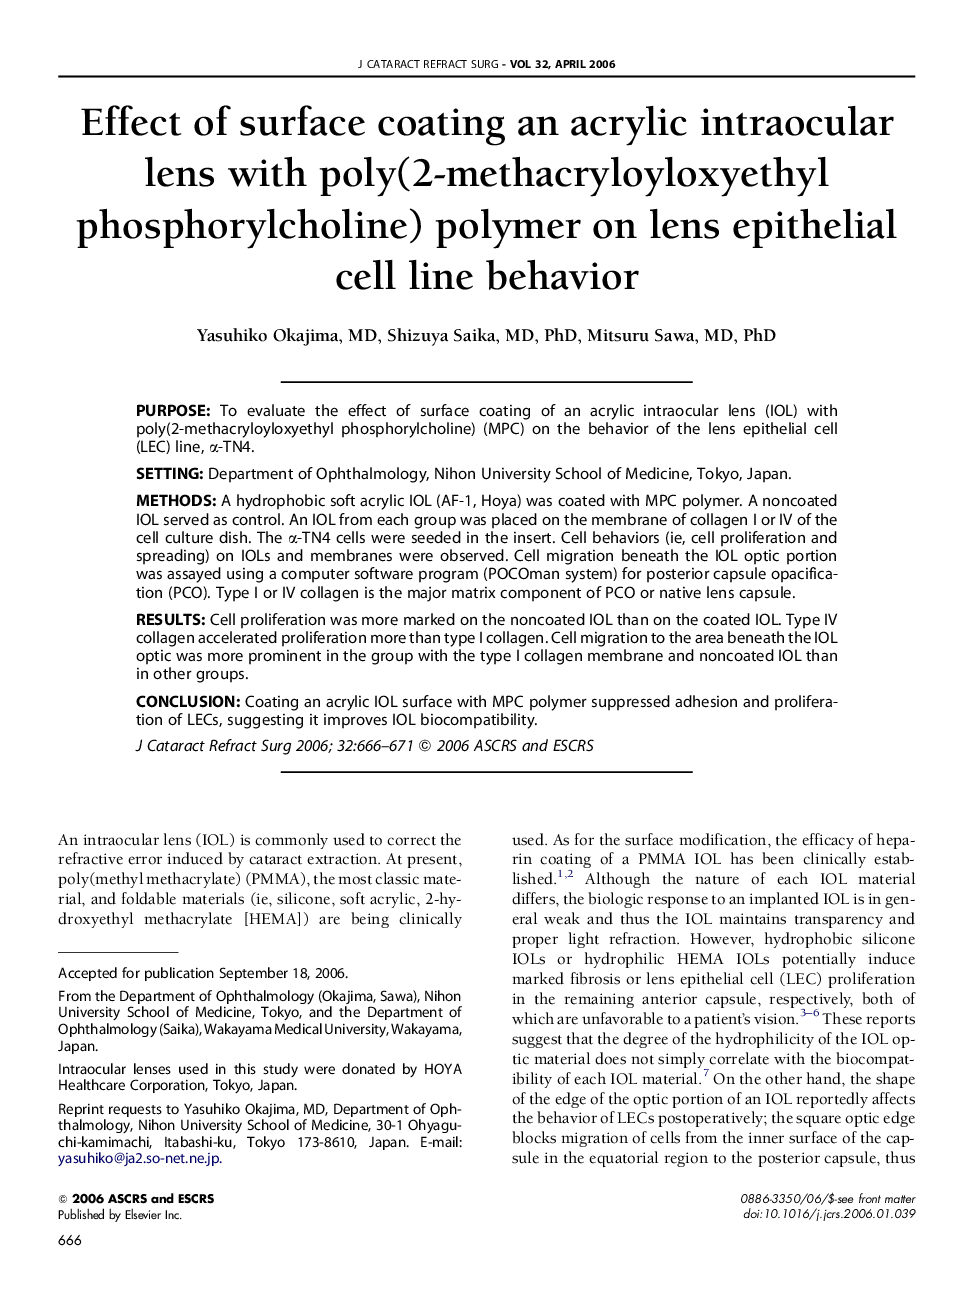 Effect of surface coating an acrylic intraocular lens with poly(2-methacryloyloxyethyl phosphorylcholine) polymer on lens epithelial cell line behavior